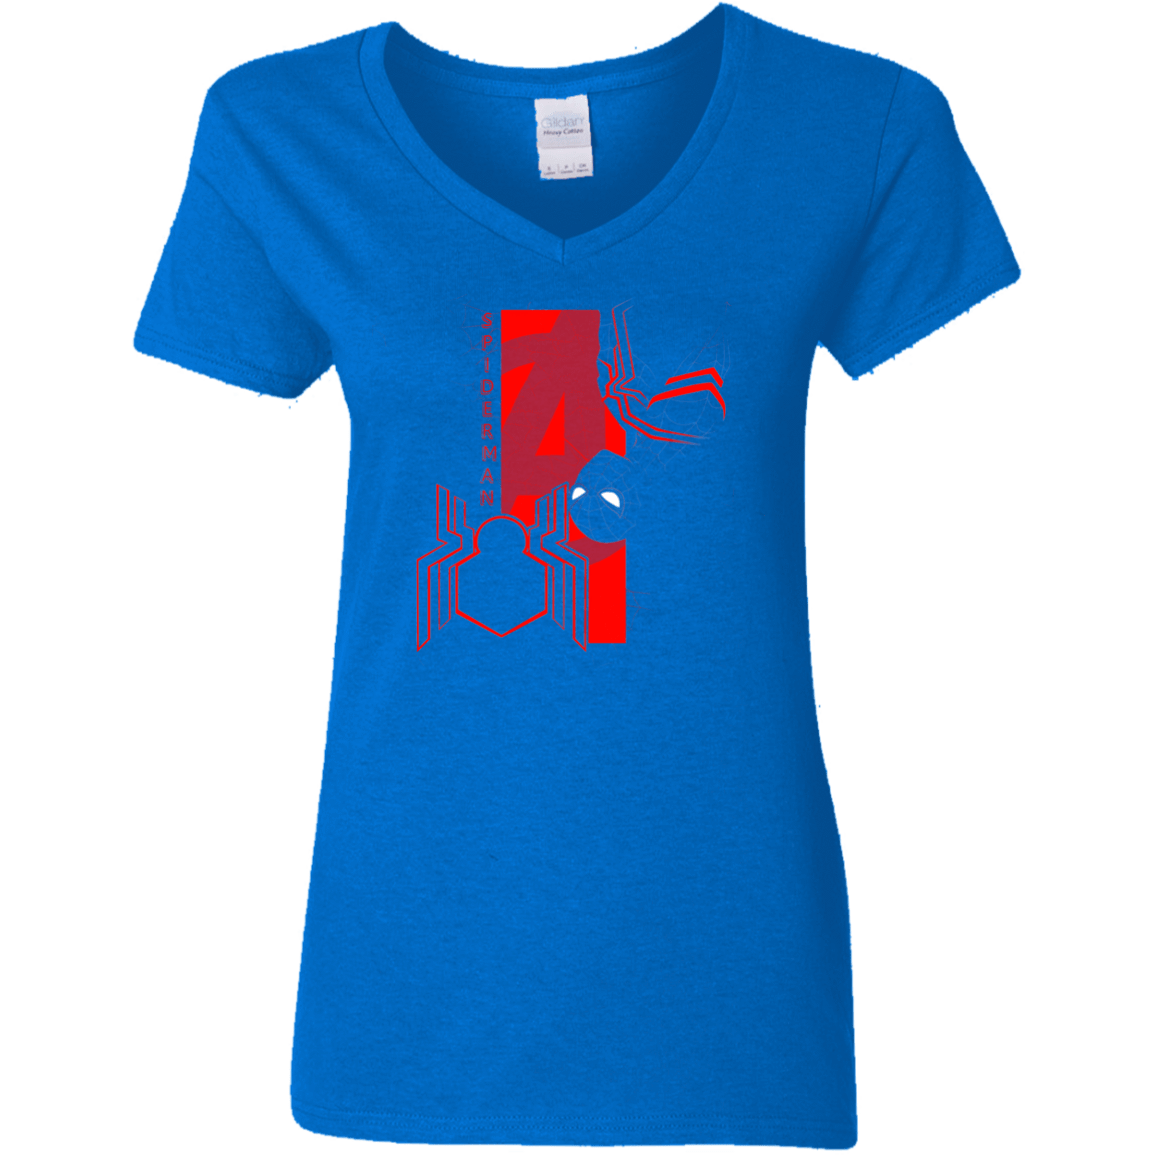 T-Shirts Royal / S Spiderman Profile Women's V-Neck T-Shirt